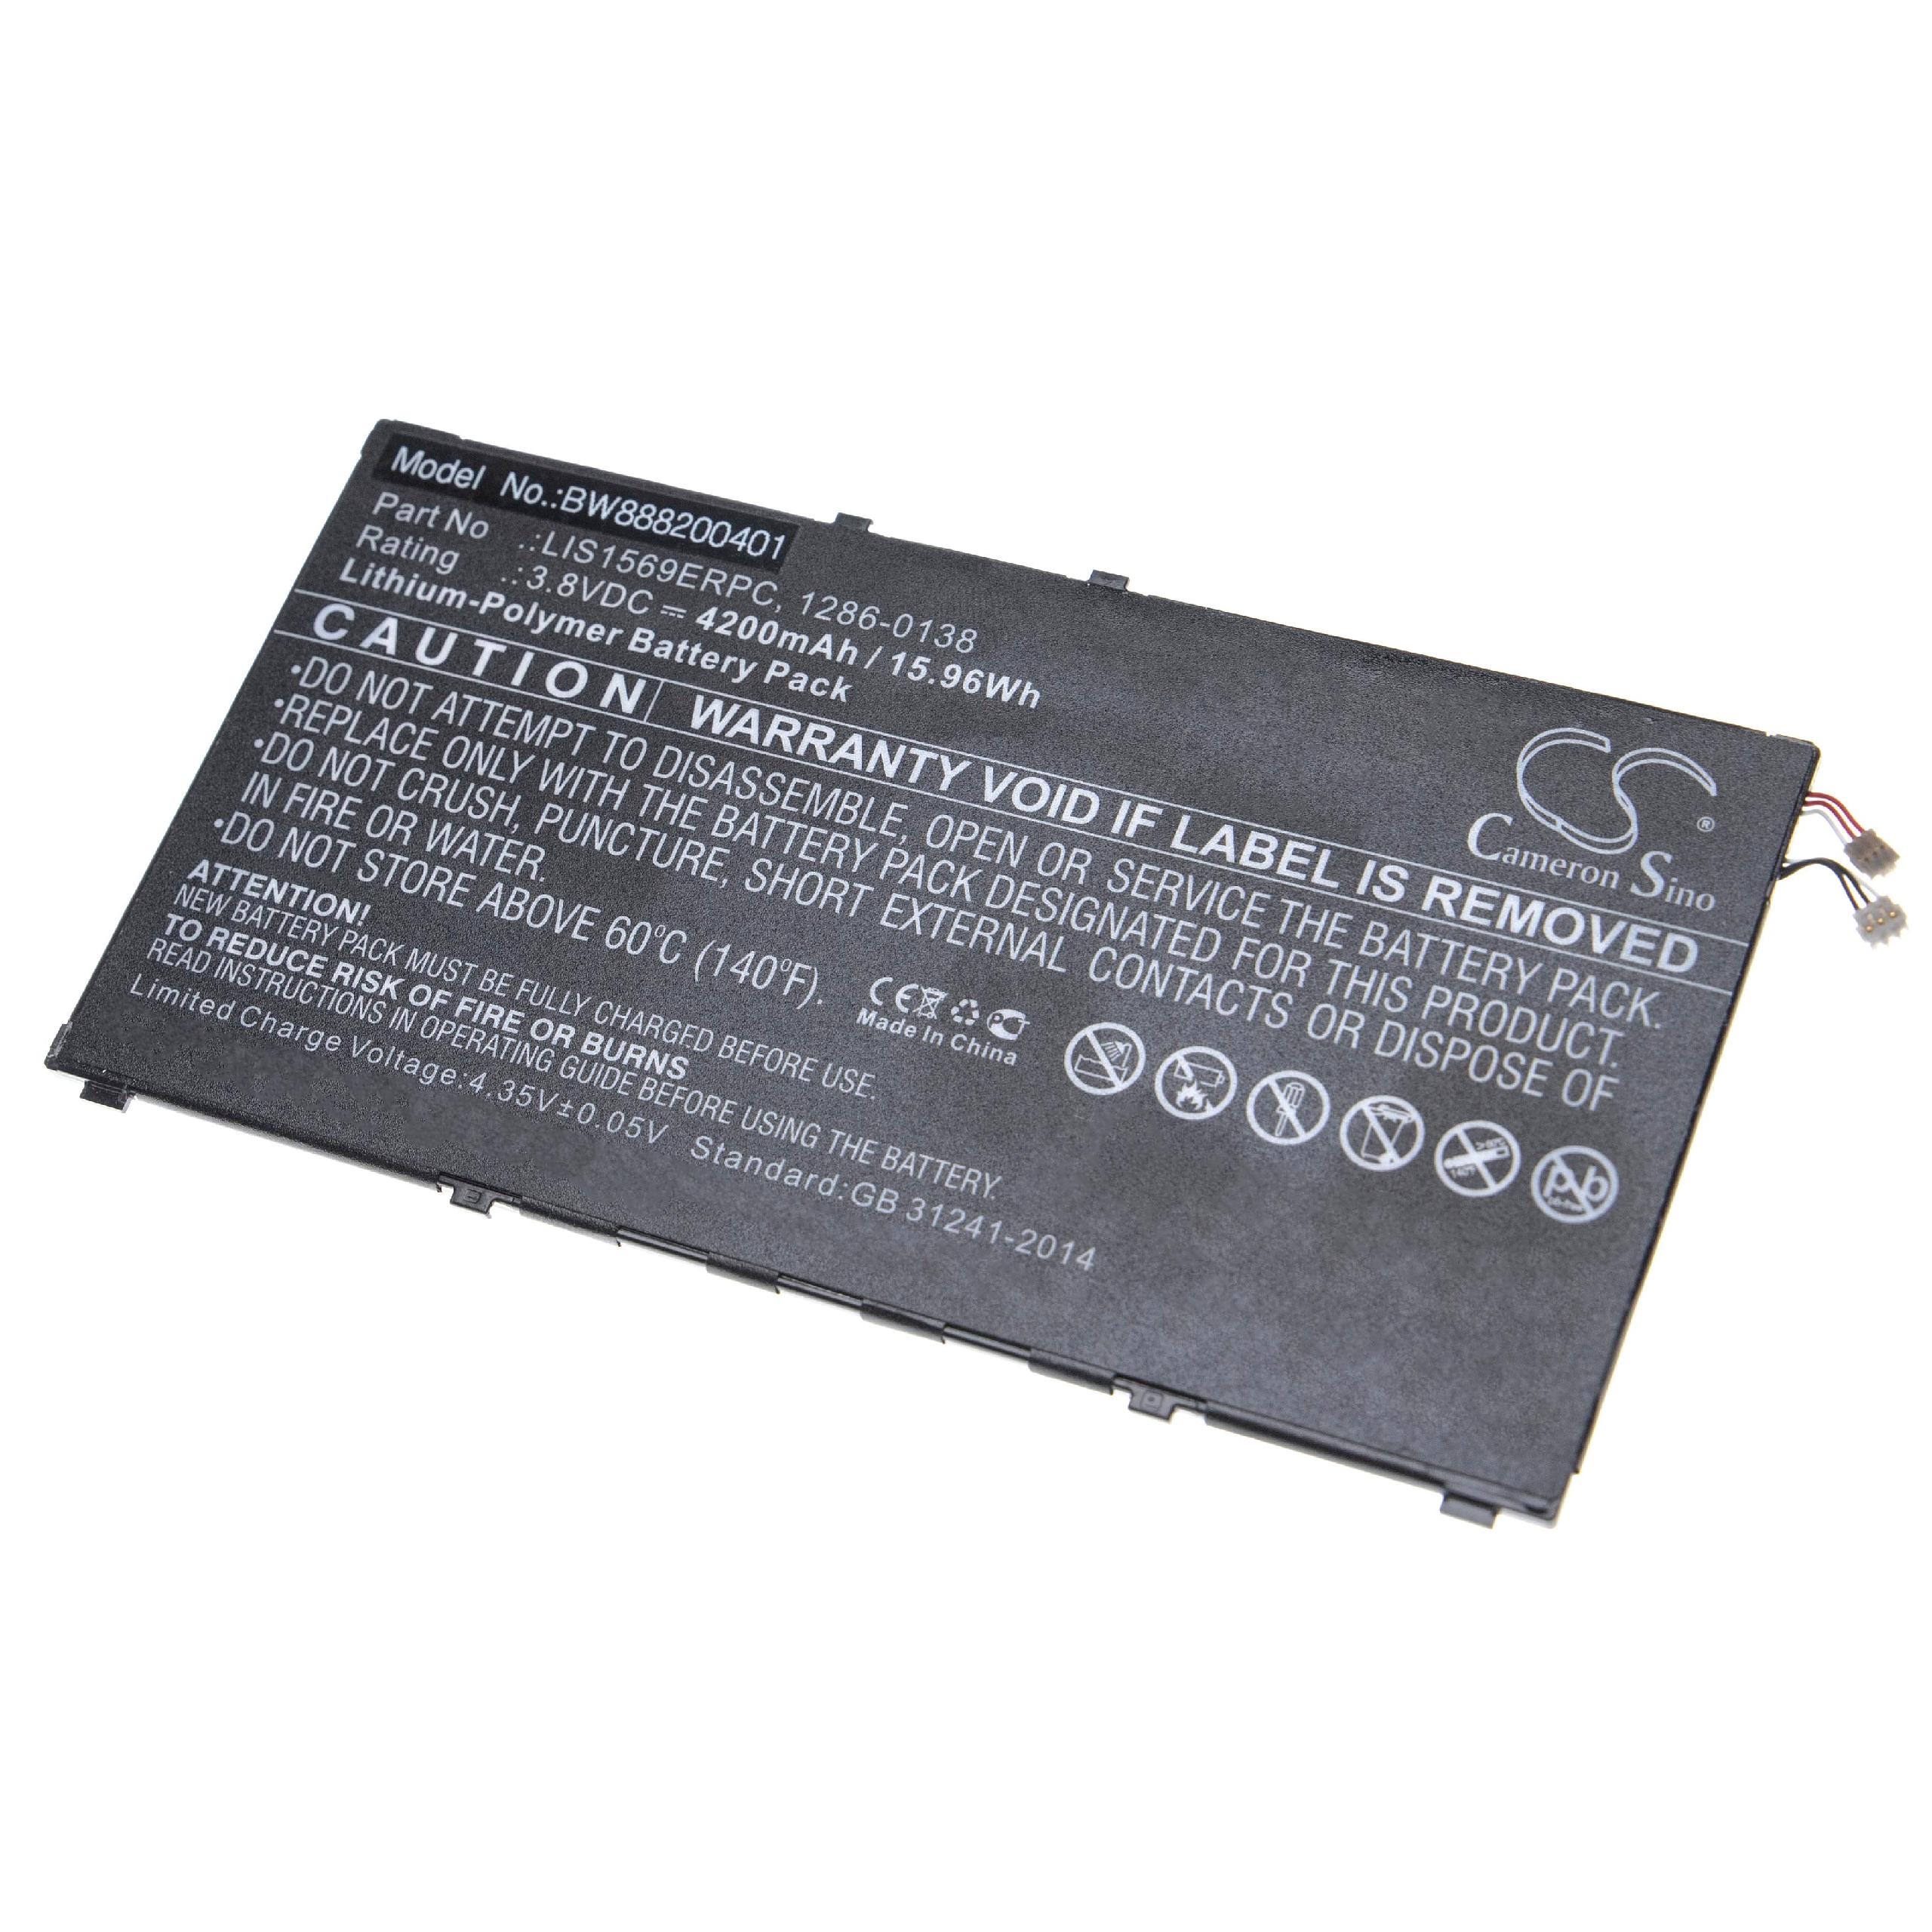 Akku als Ersatz für Sony LIS1569ERPC, 1286-0138 - 4200mAh 3,8V Li-Polymer